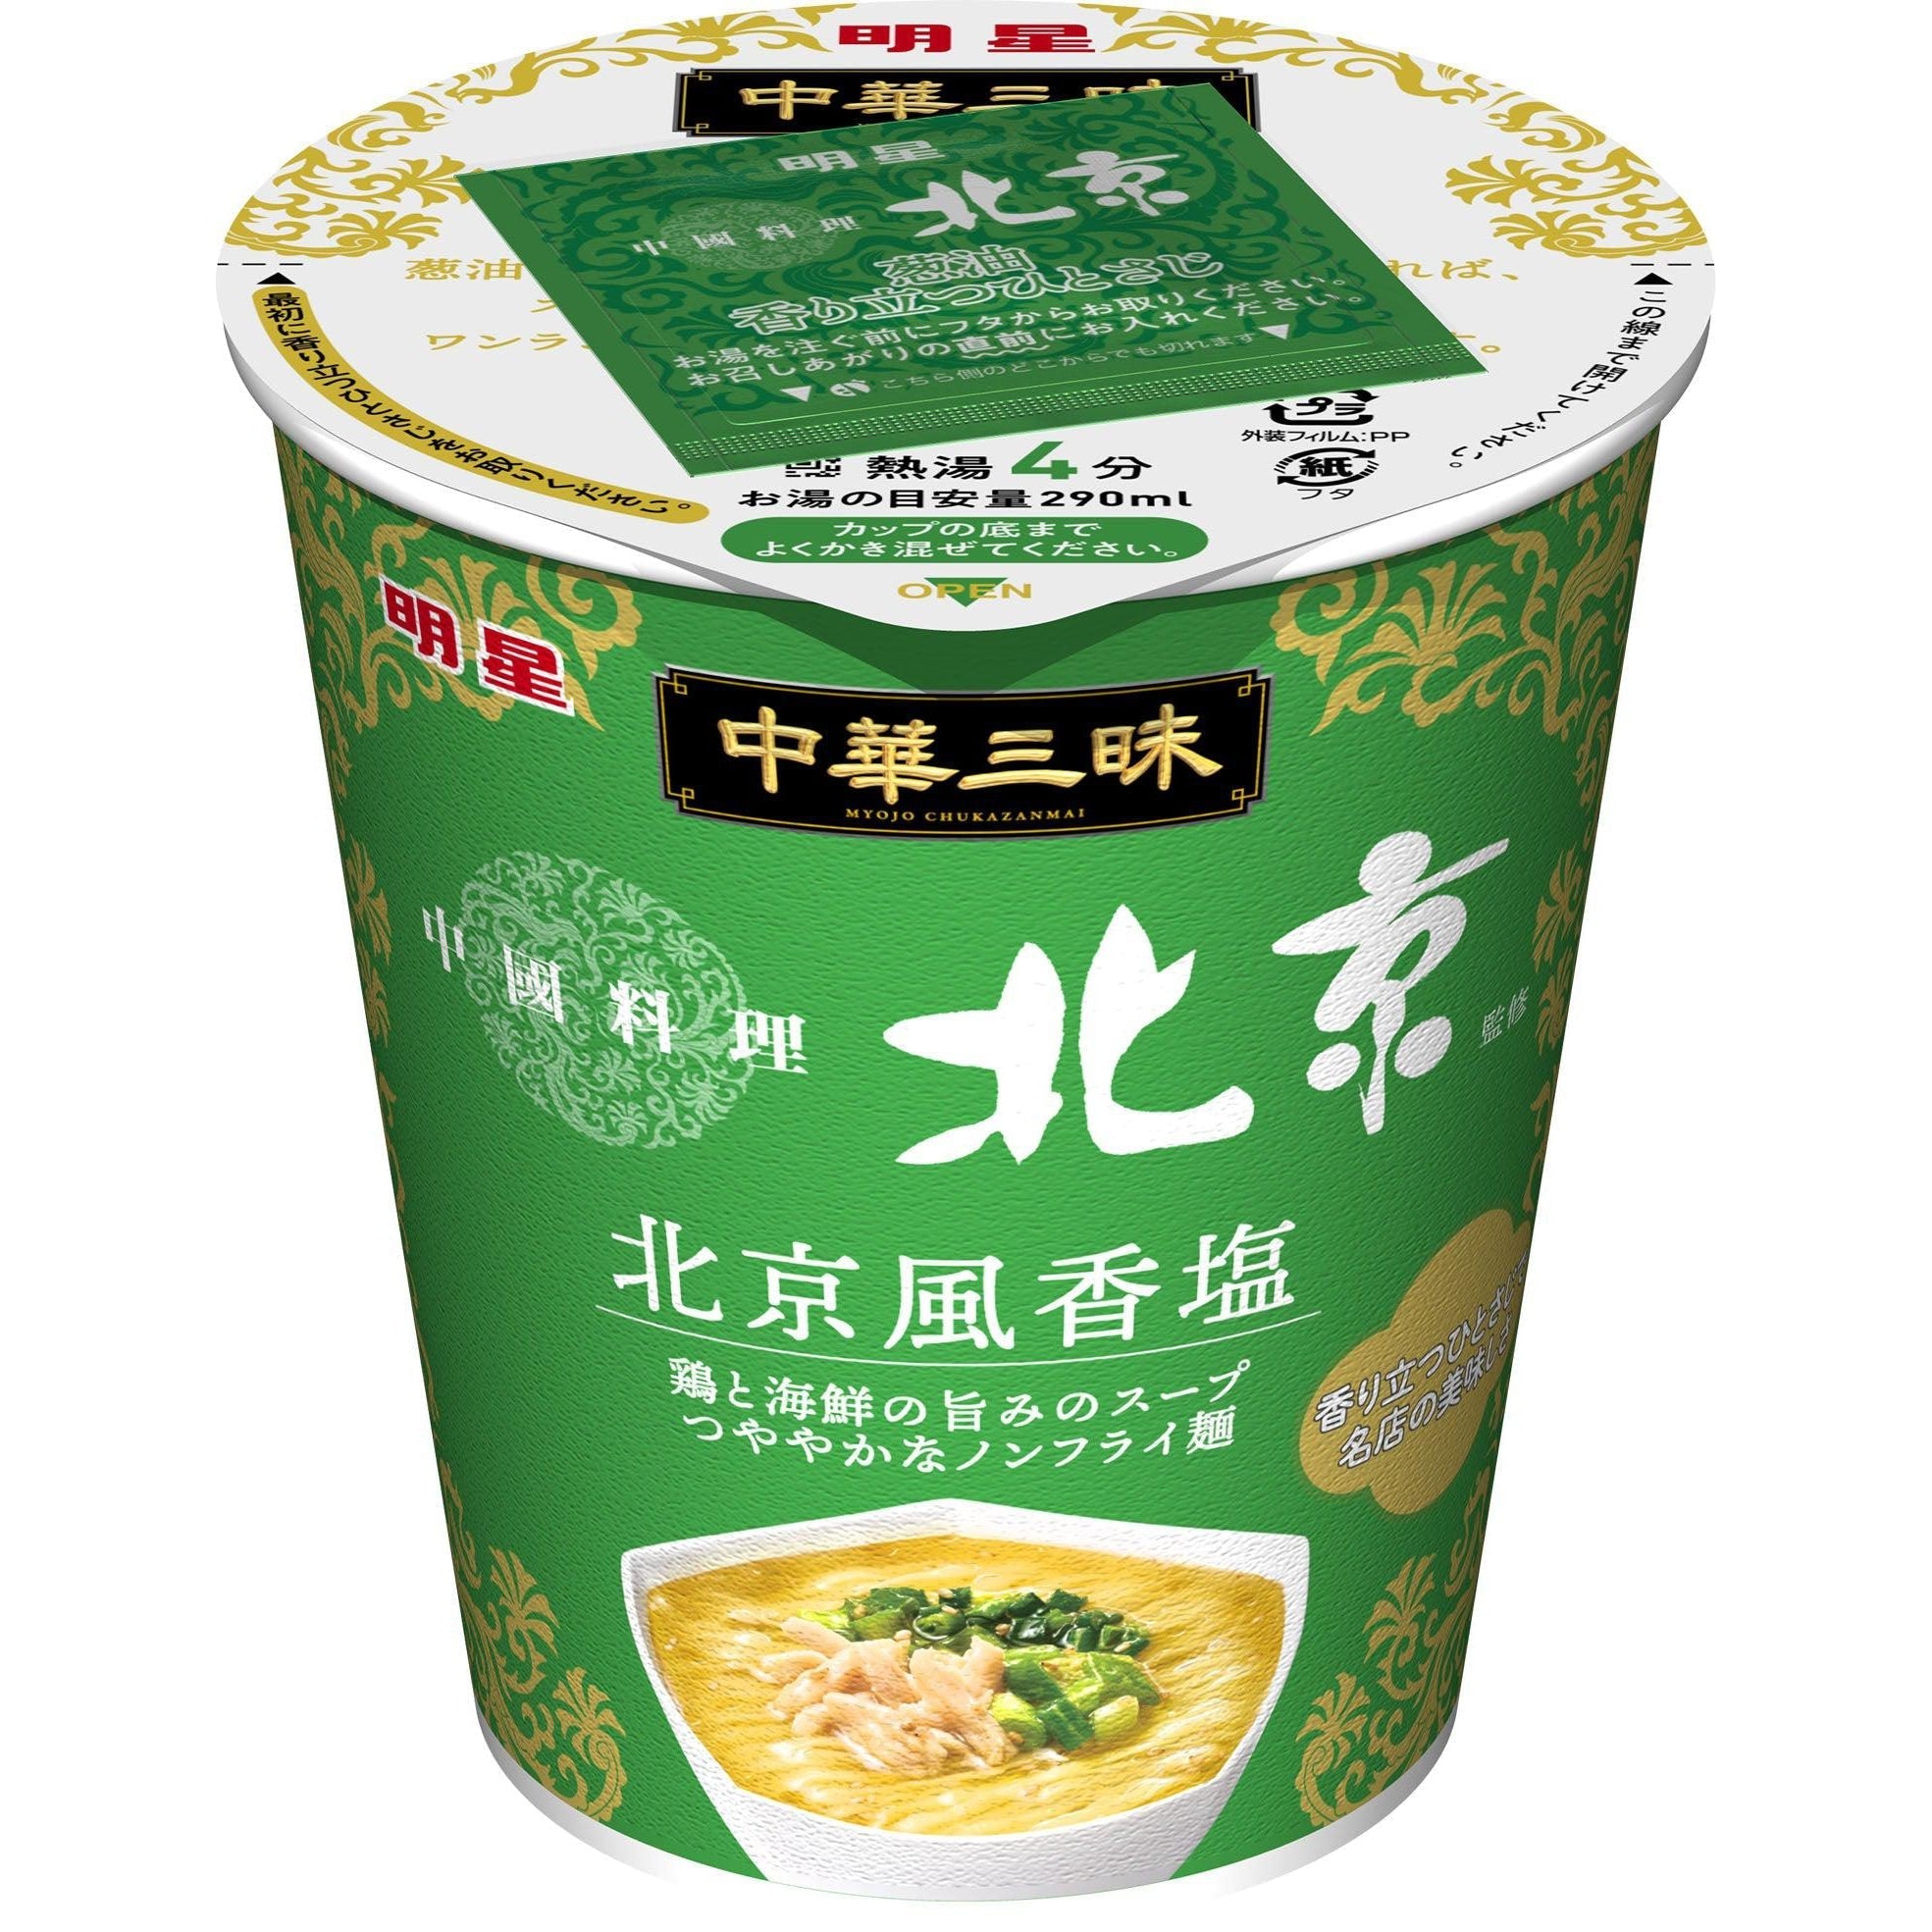 Myojo Ippeichan Chukazanmai Beijing Style Shio Ramen Instant Noodles Cup 63g (Pack of 6)